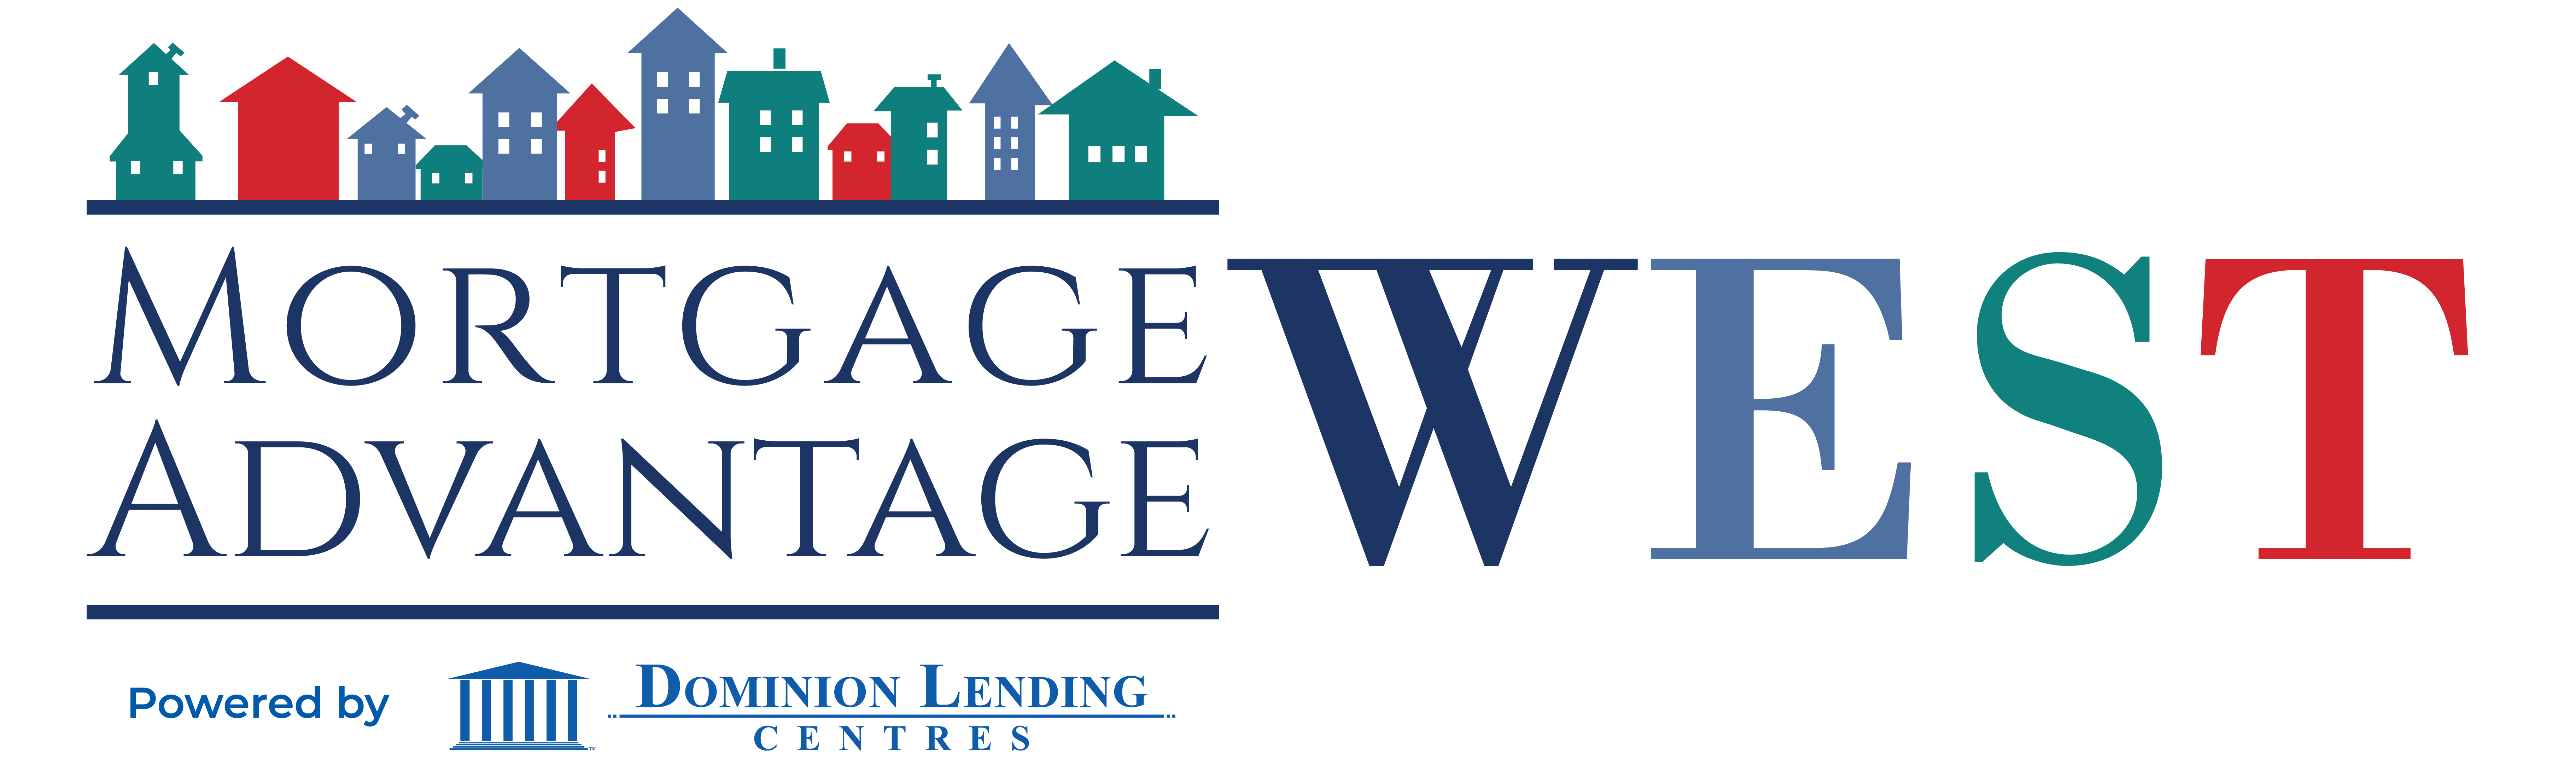 Mortgage Advantage West